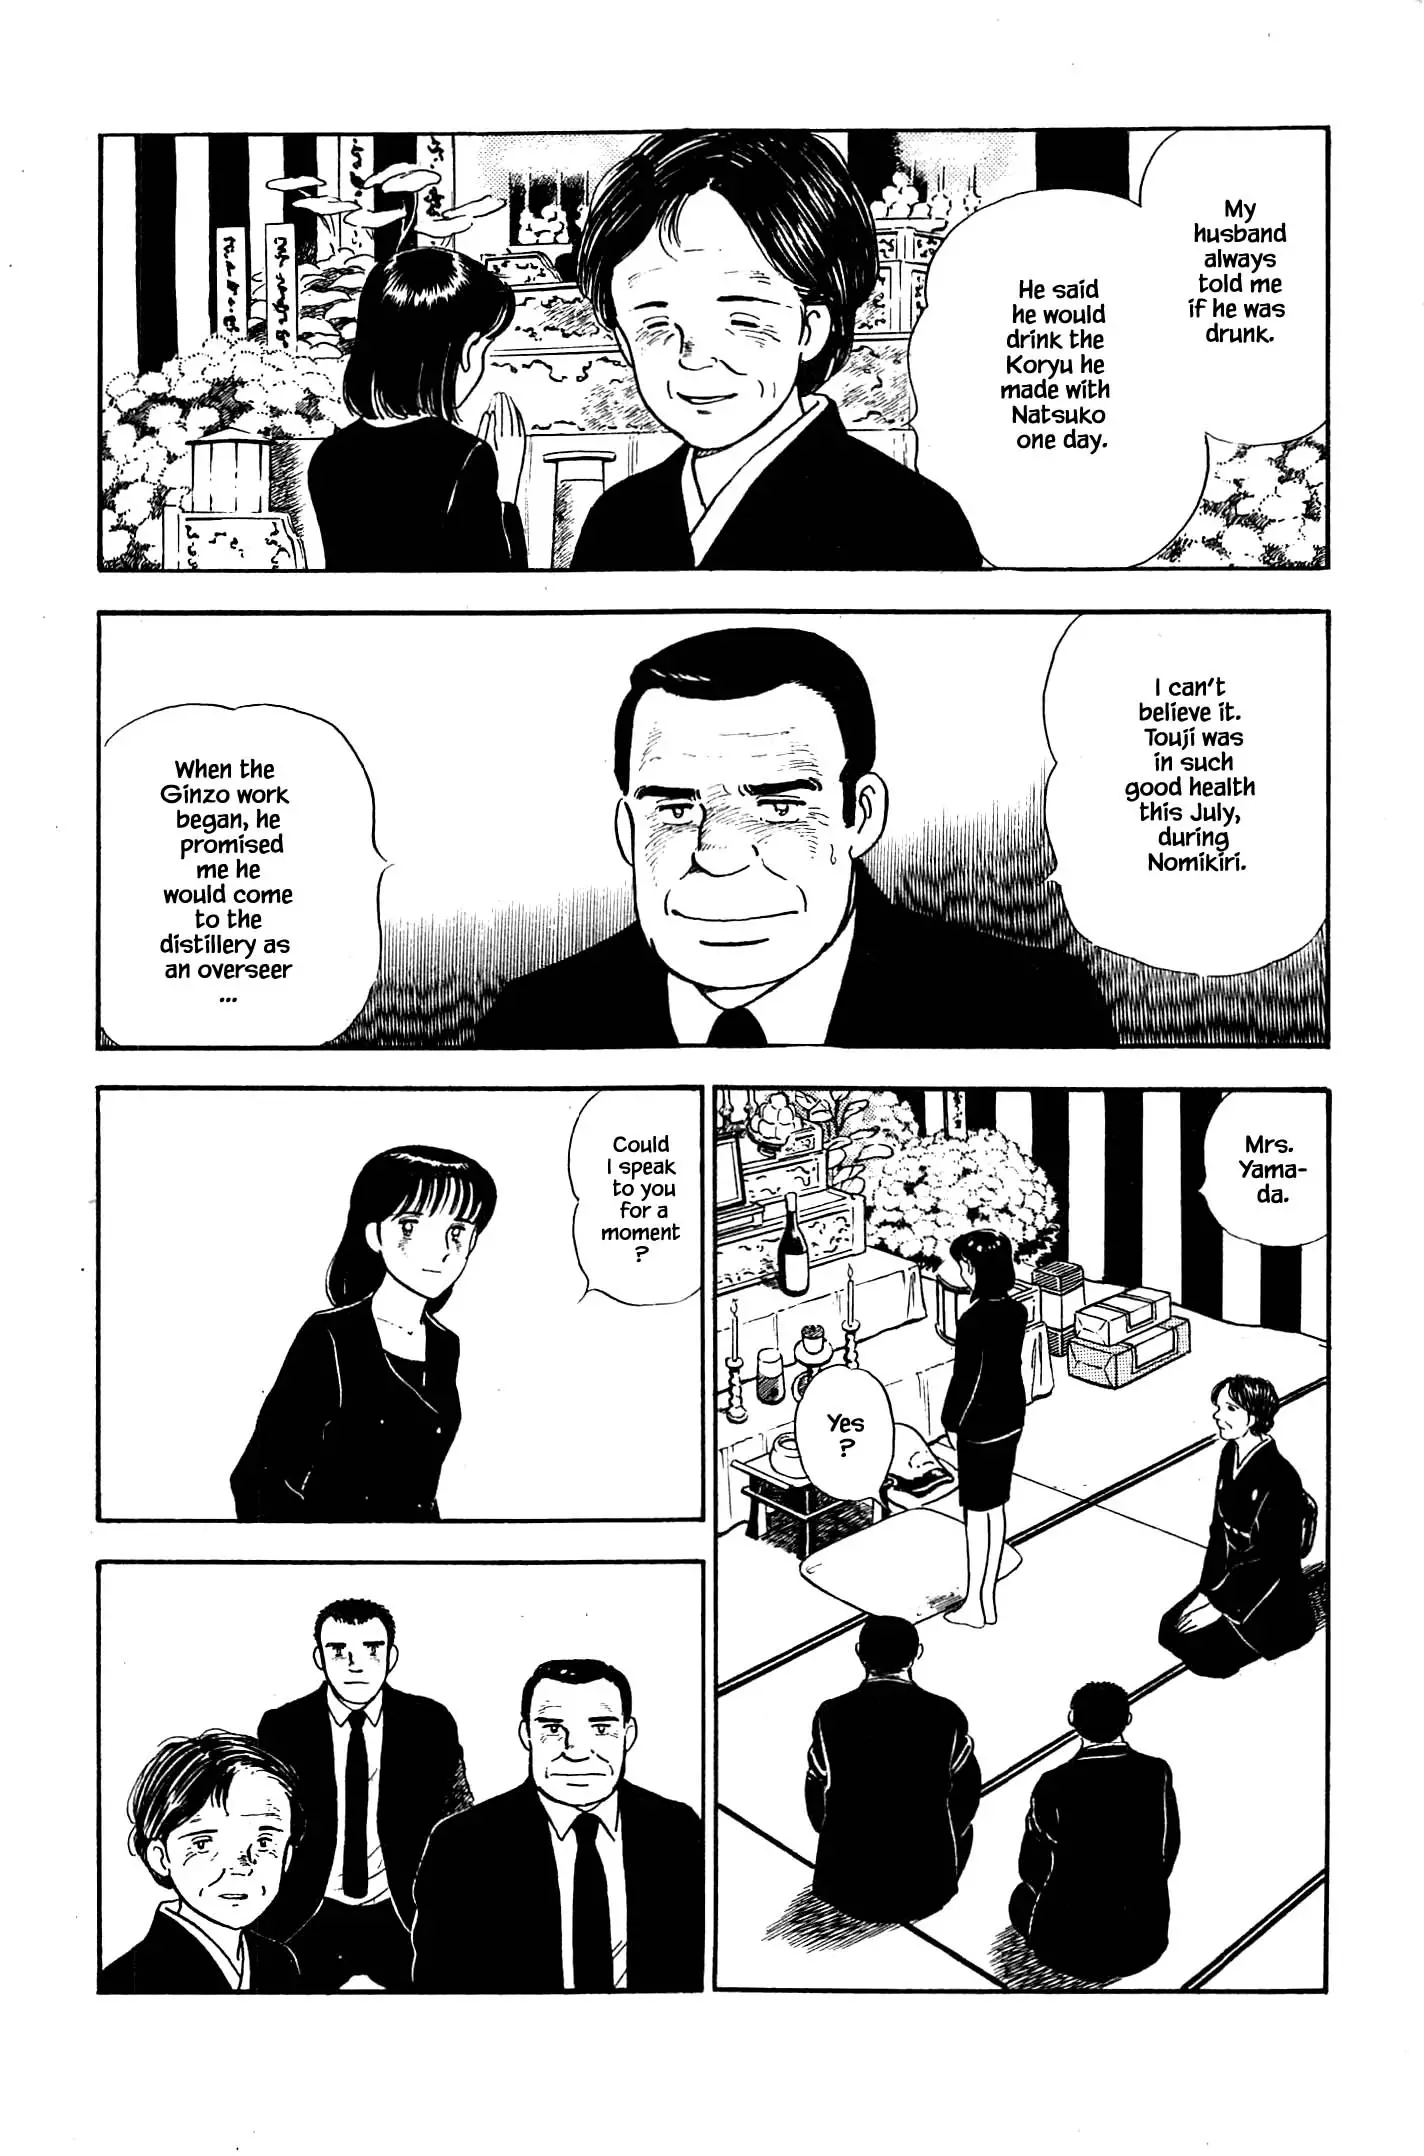 Natsuko's Sake - 131 page 8-70eab47f